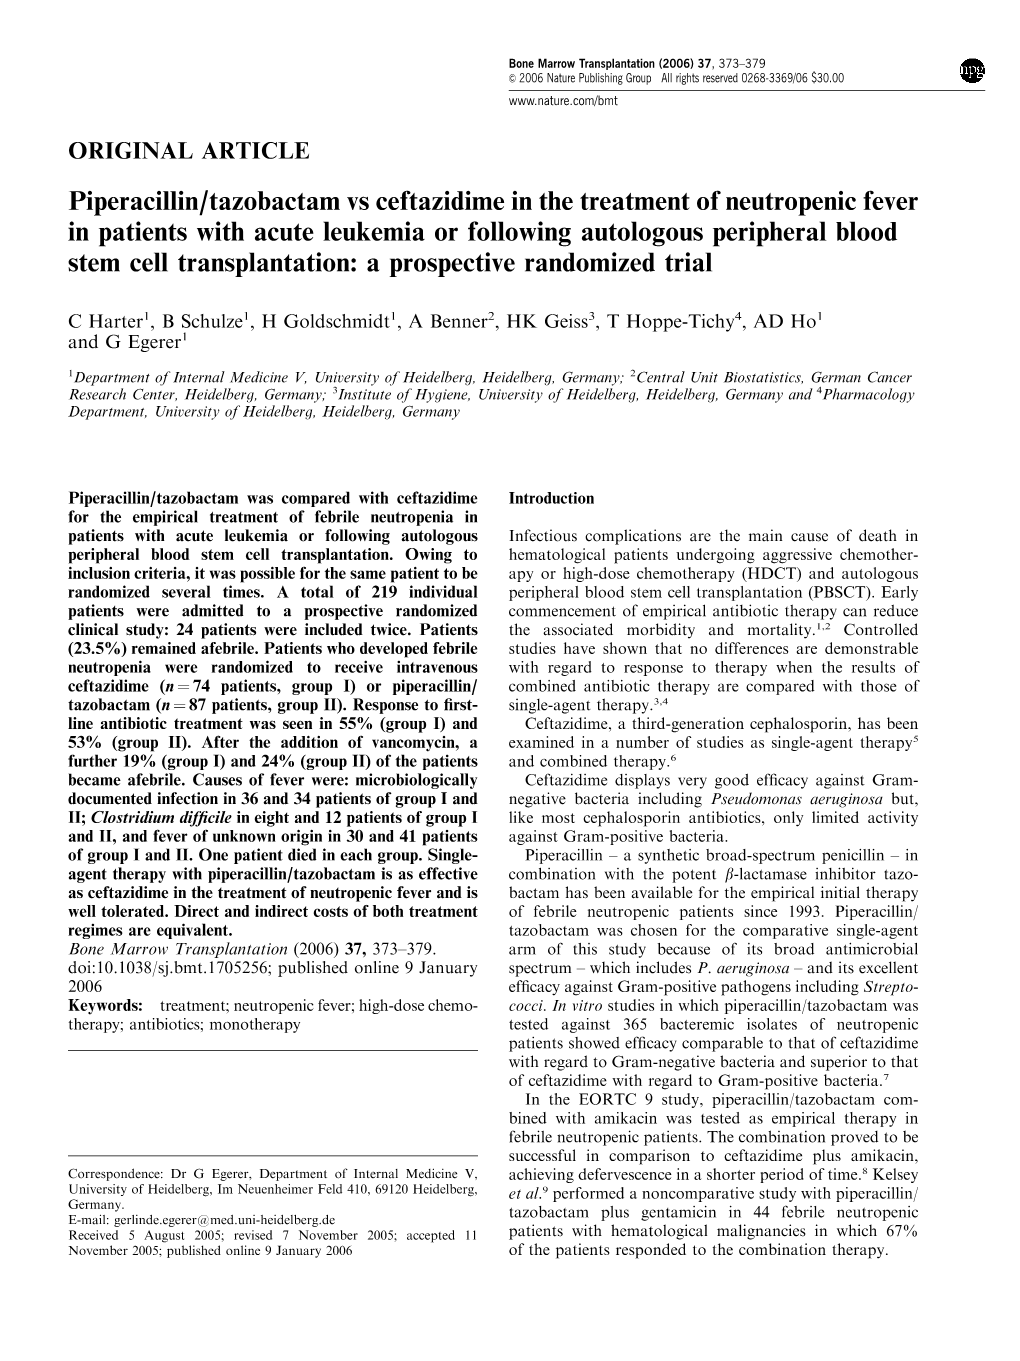 Piperacillin/Tazobactam Vs Ceftazidime in the Treatment of Neutropenic